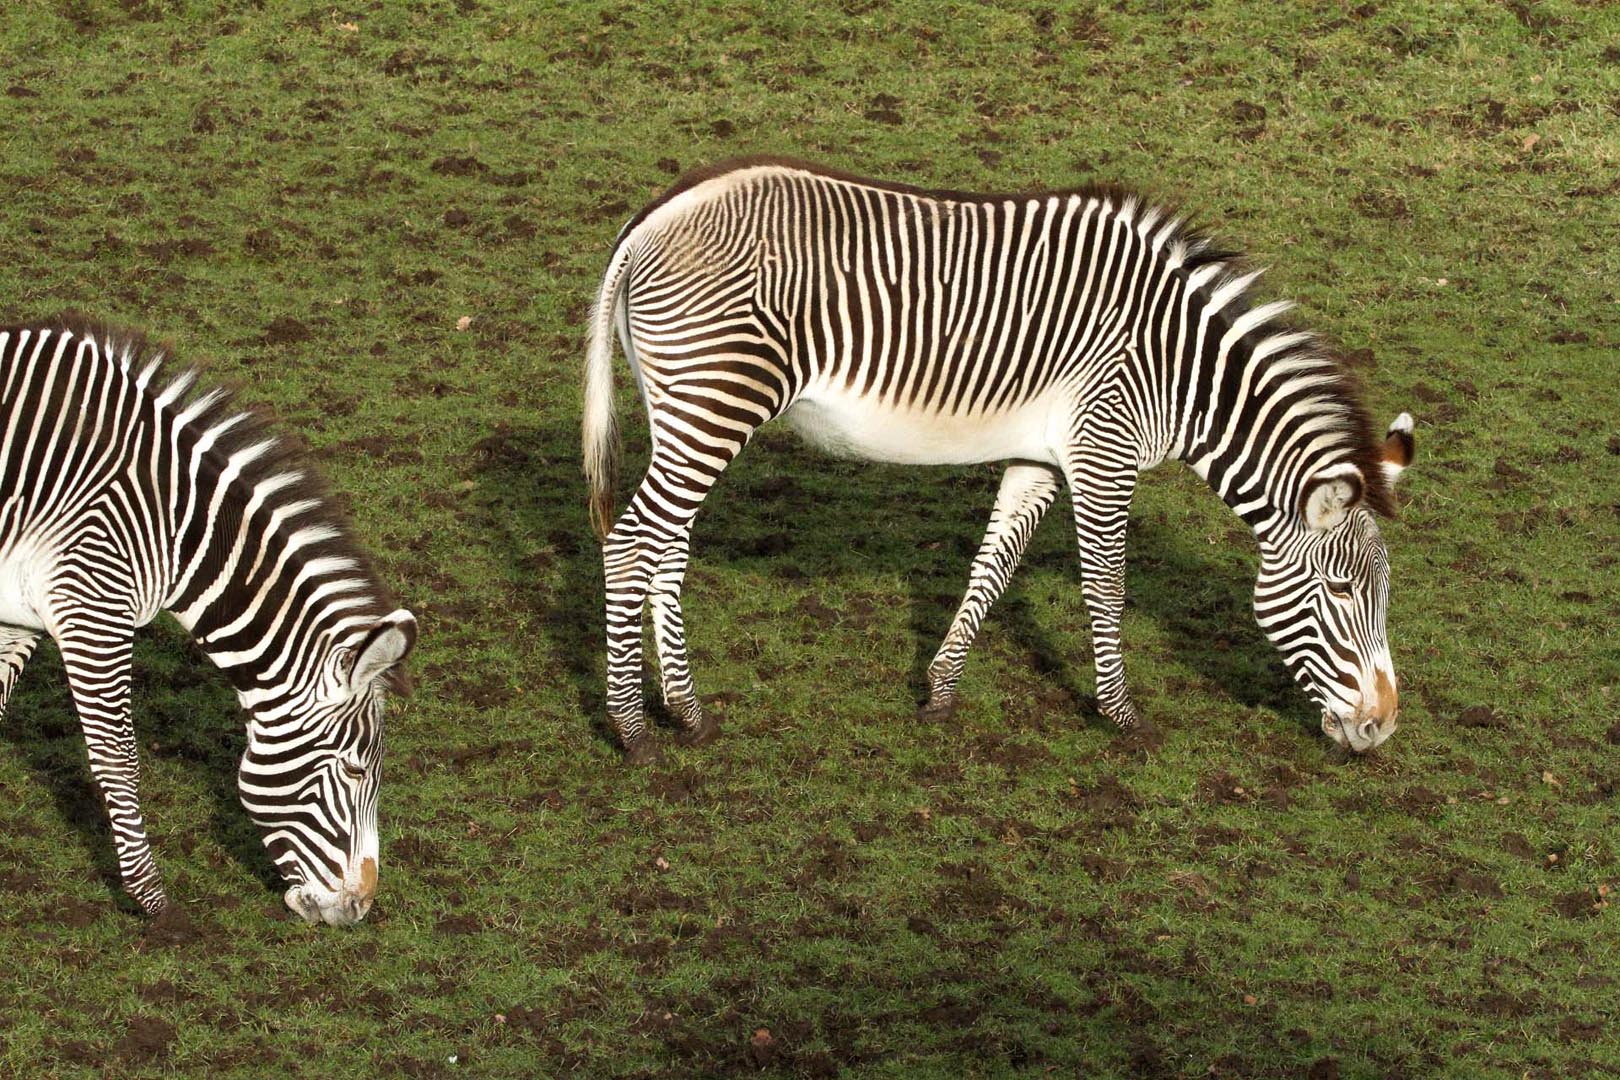 Two Grevy's zebras grazing on grass Image: ALLIE MCGREGOR 2023